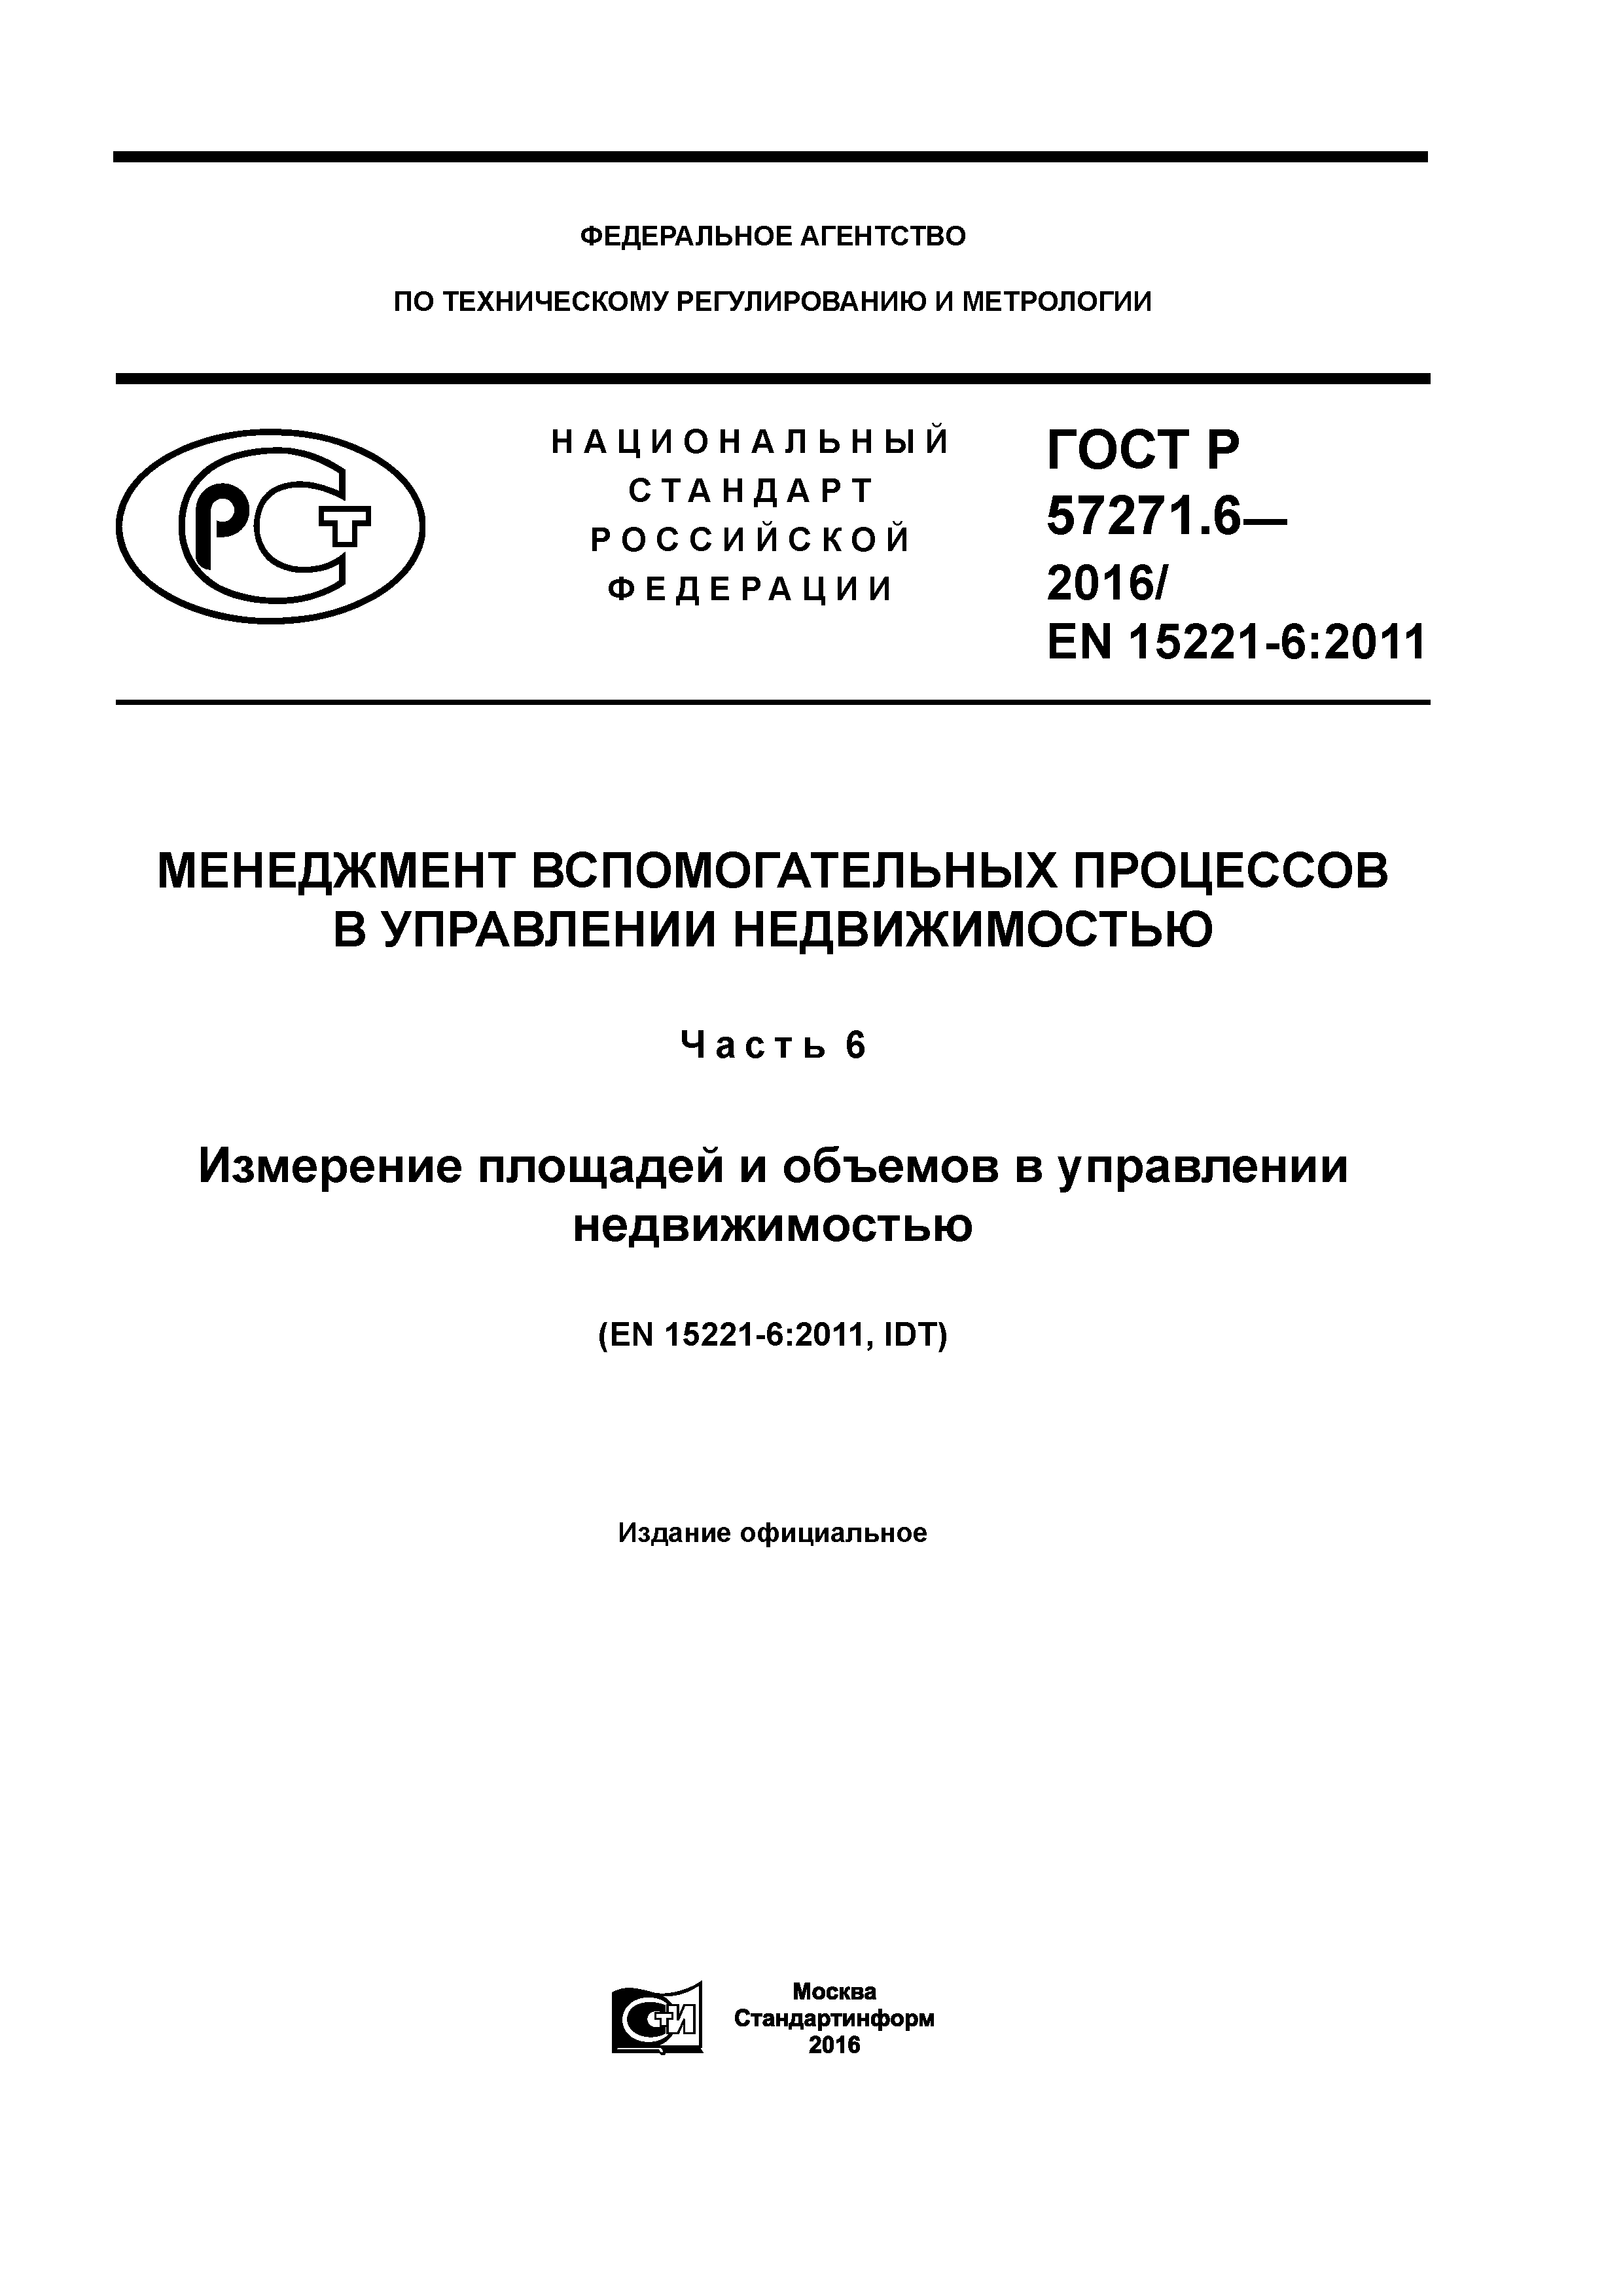 ГОСТ Р 57271.6-2016